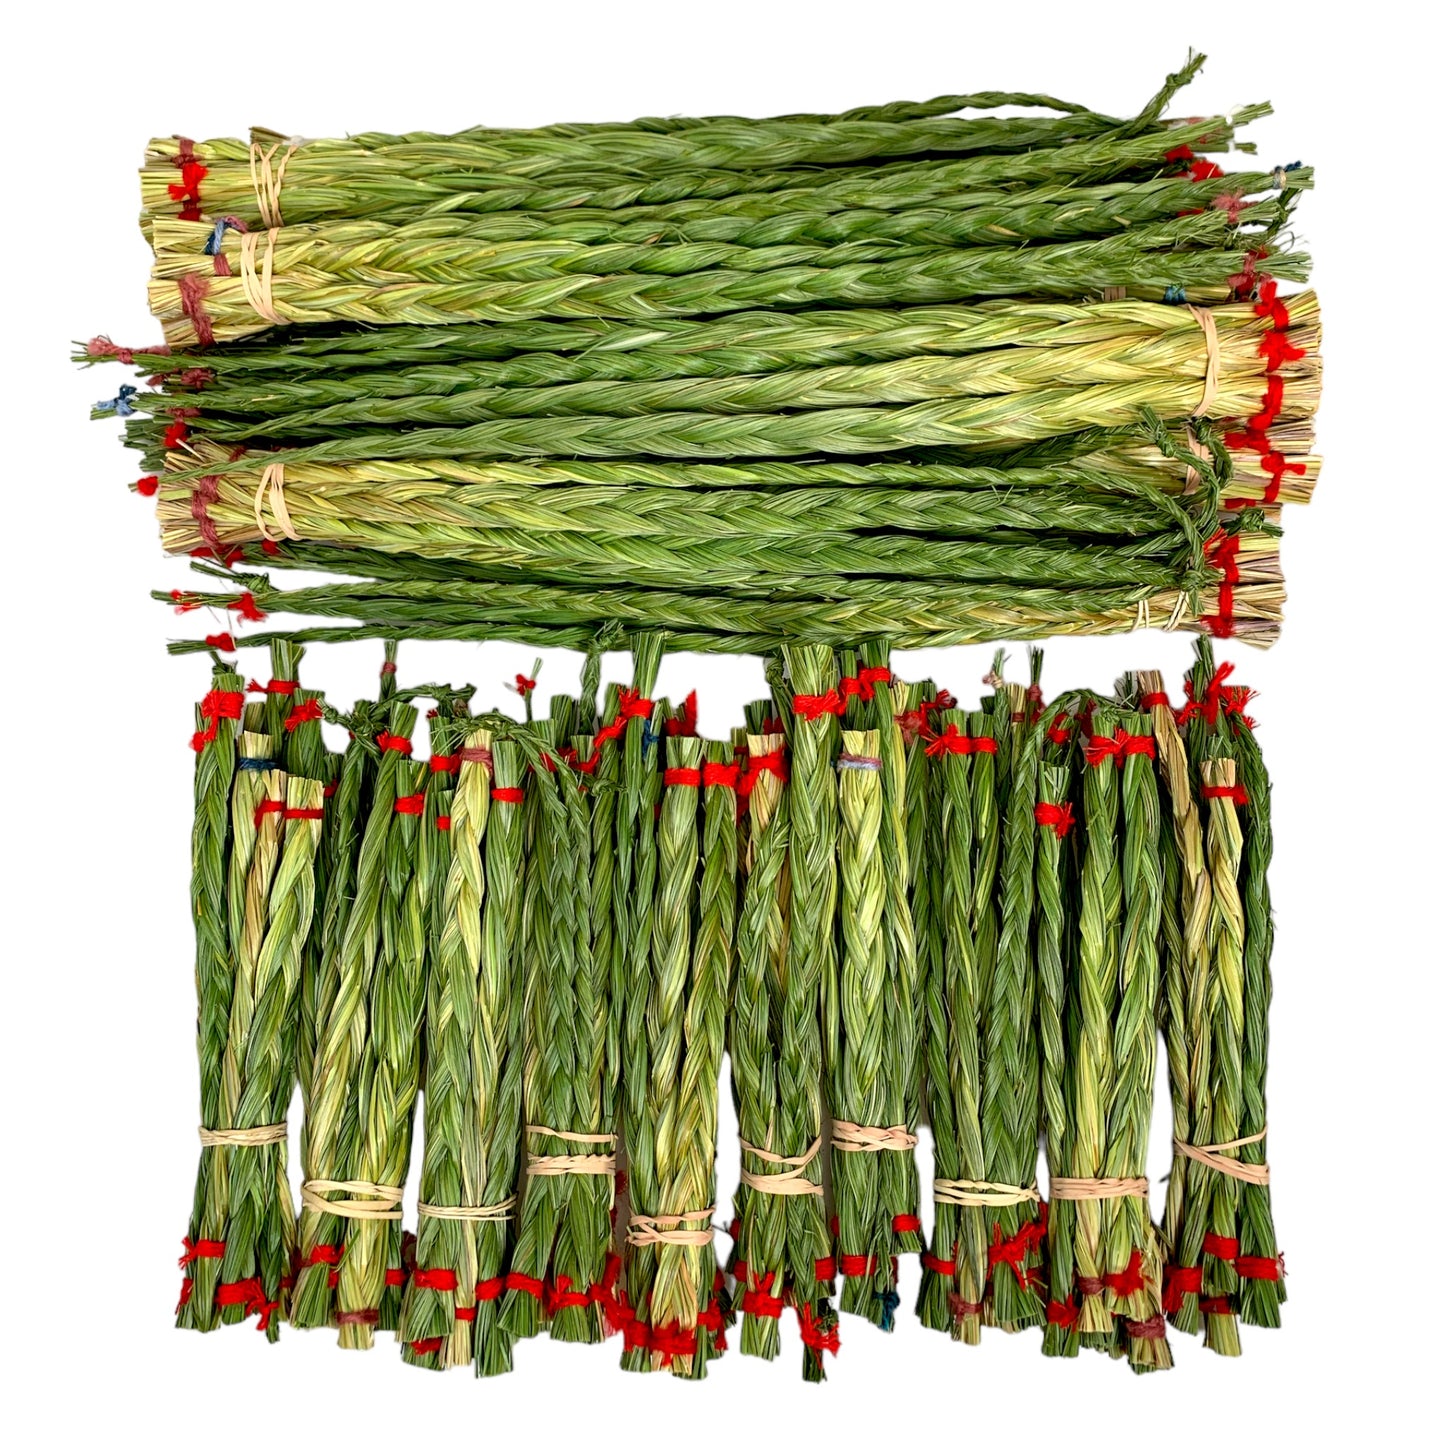 Braided Sweetgrass - 9 - 14 inch - Price Per Braid - Smudge Supplies - Canada - NEW523